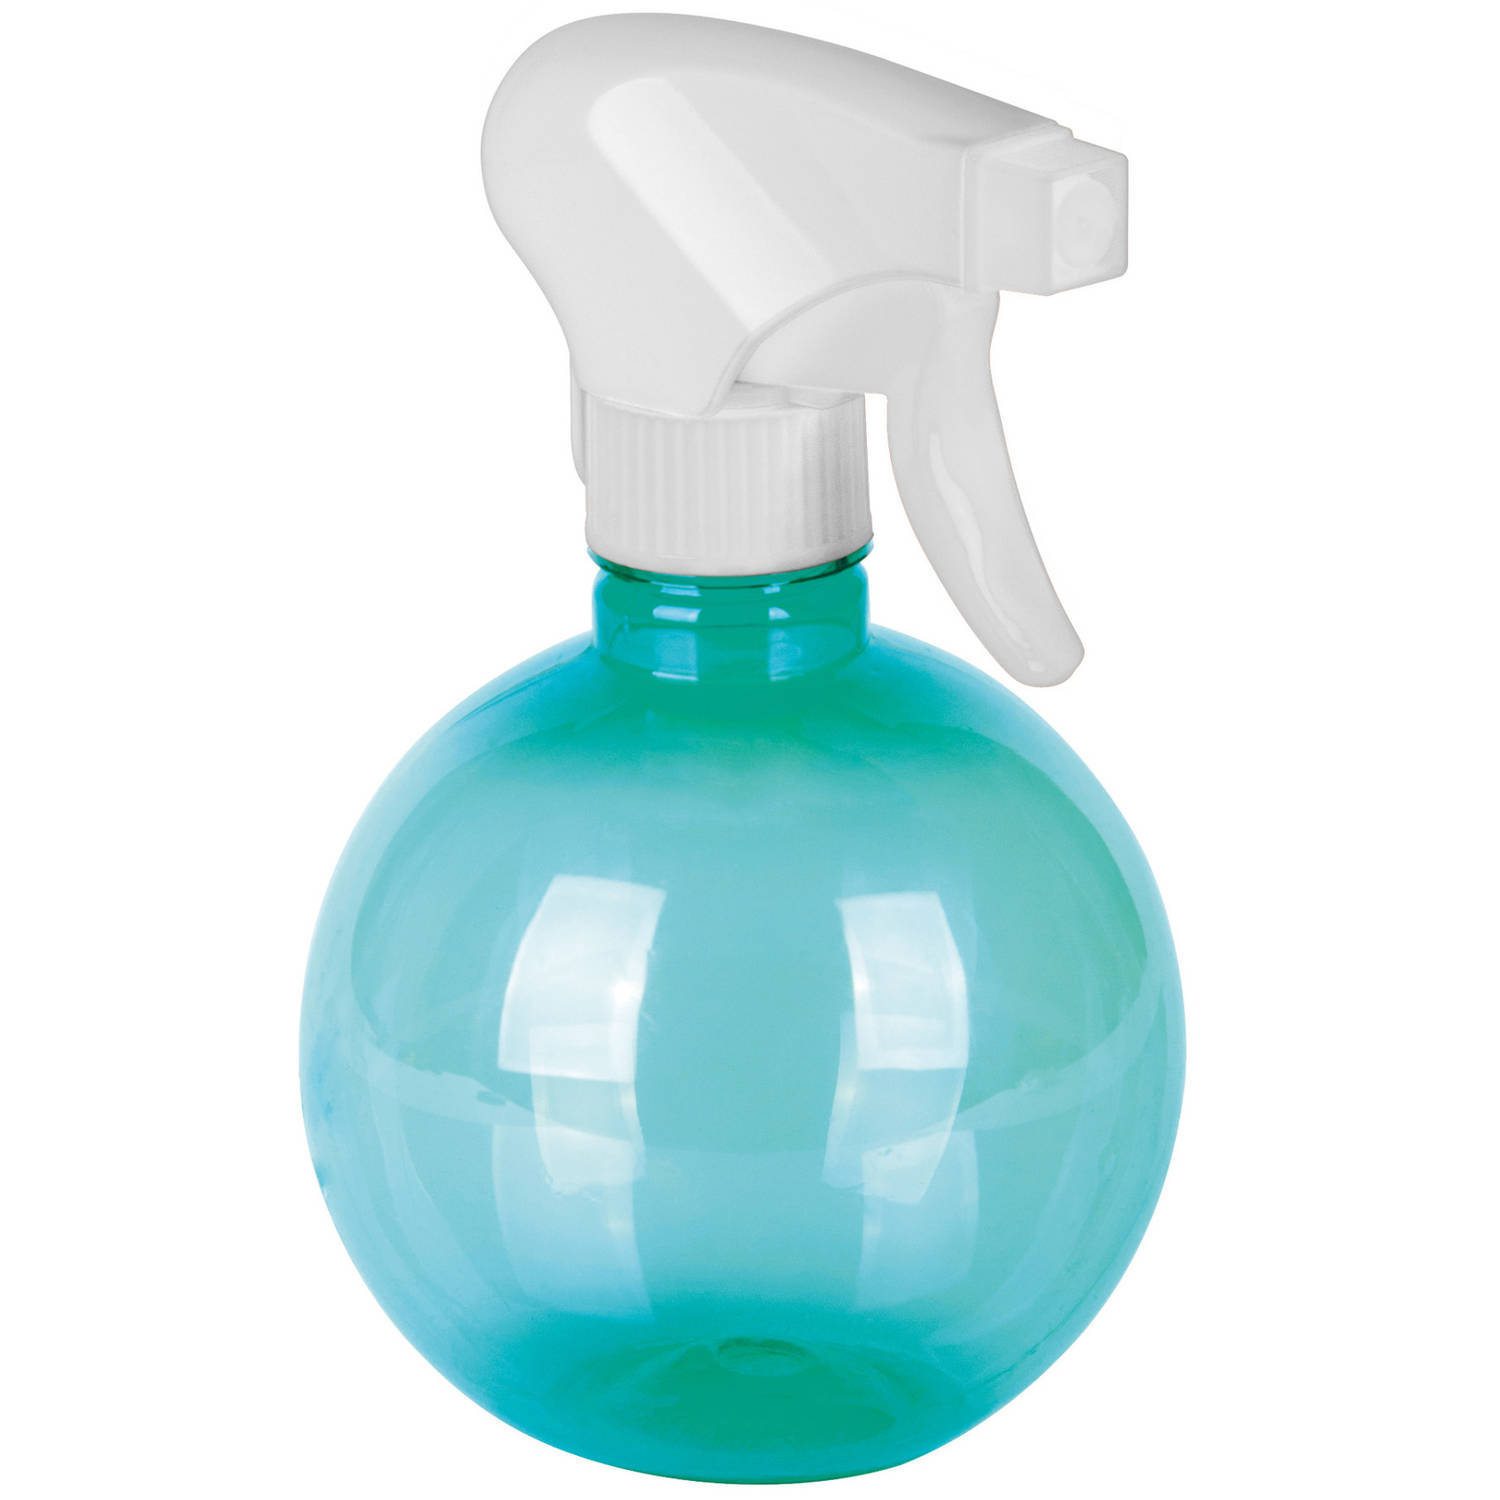 Juypal Plantenspuit/waterverstuiver- wit/turquoise - 400 ml - kunststof - sprayflacon - Waterverstuivers